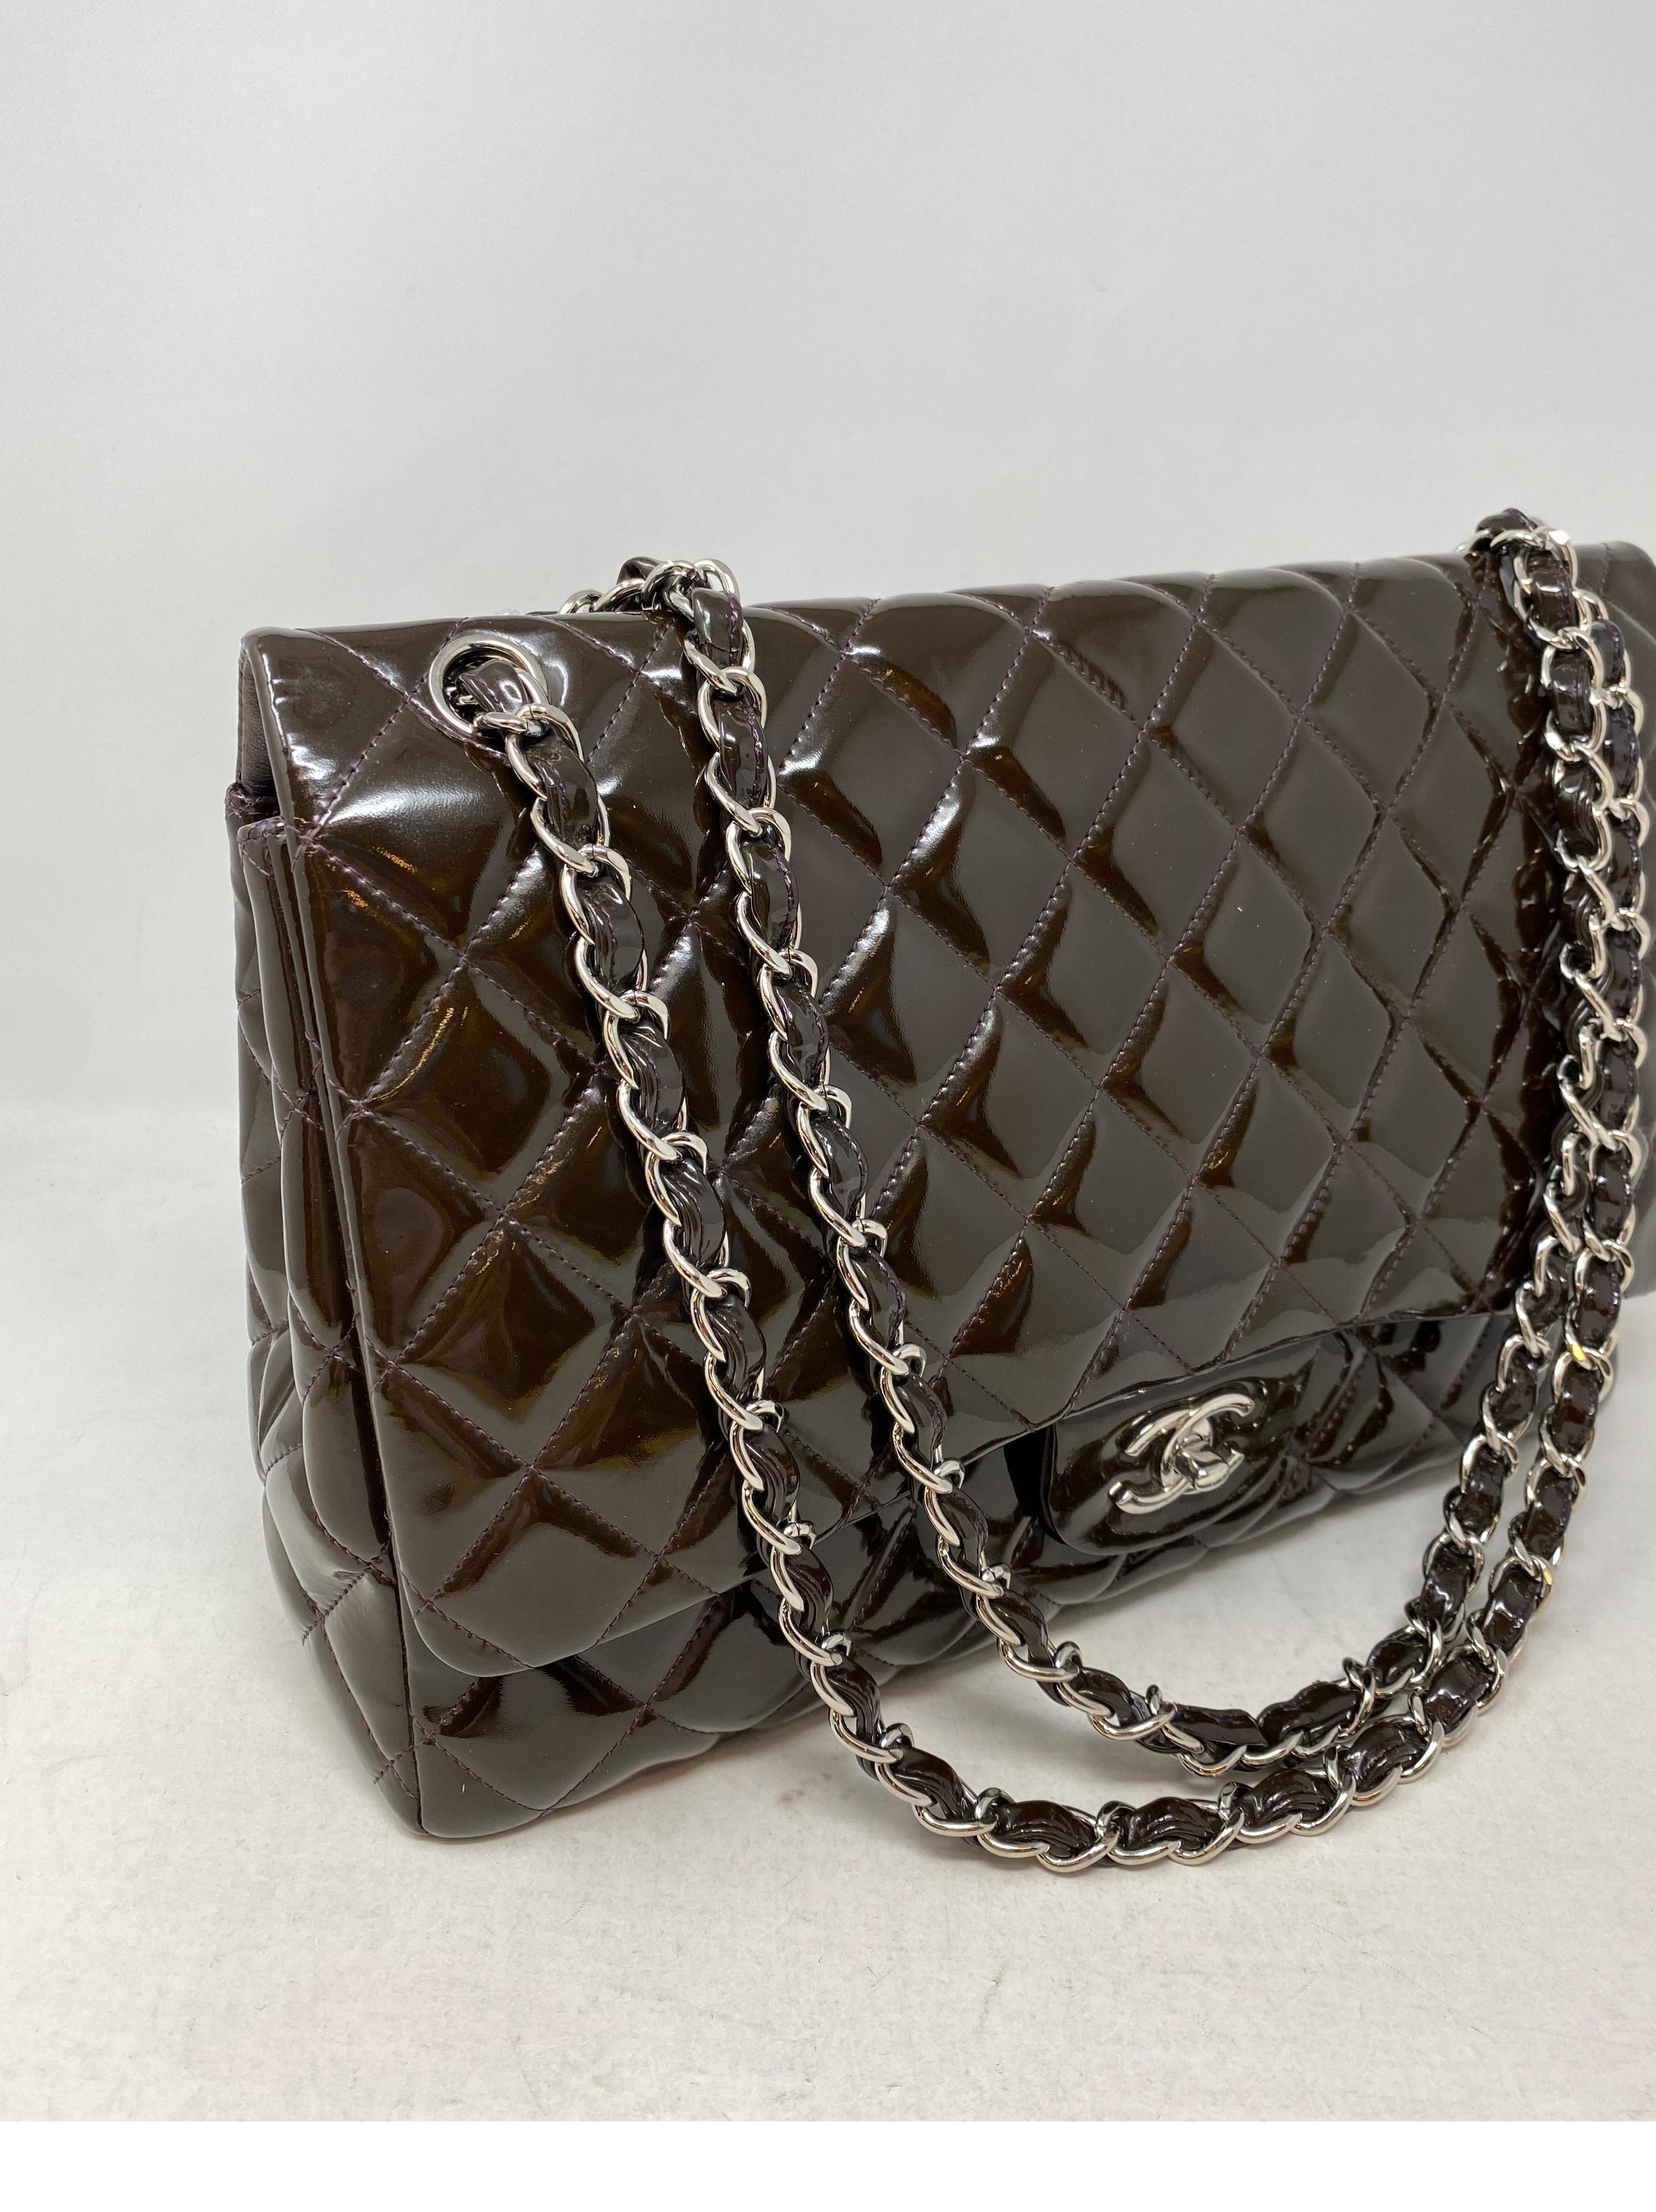 Chanel Jumbo Patent Leather Brown Bag  11